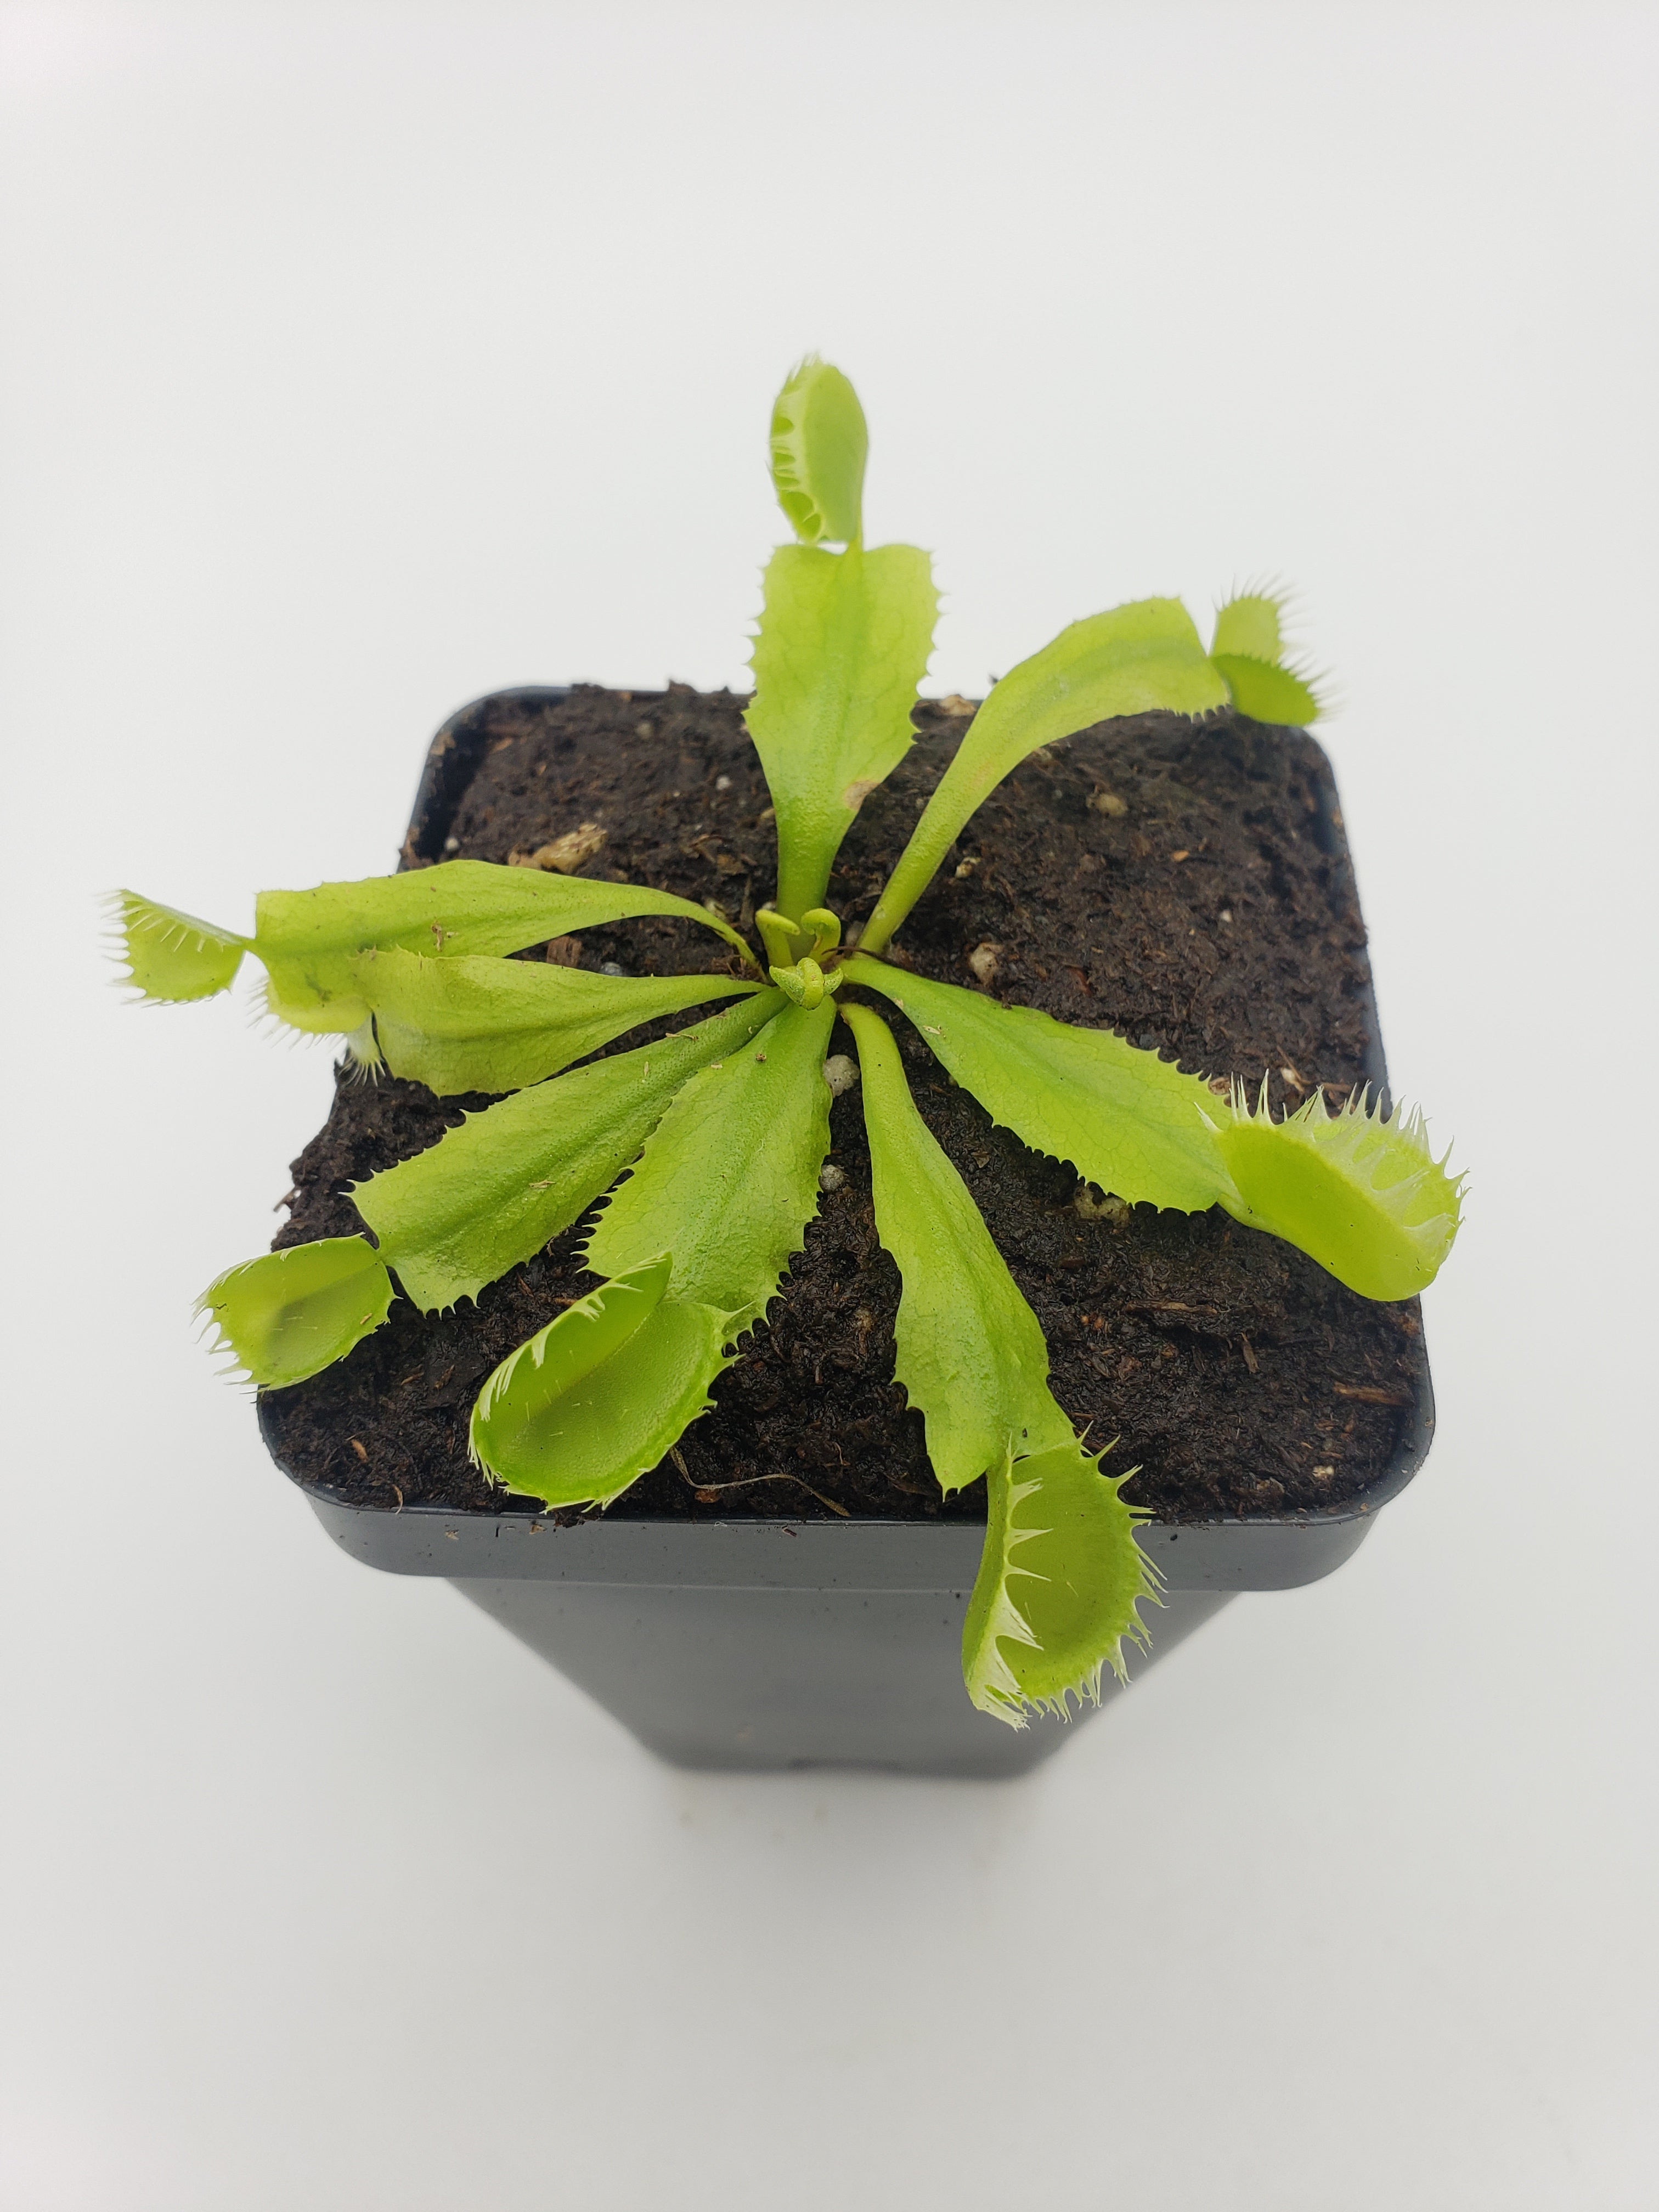 Venus flytrap (Dionaea muscipula) 'Triton' - Rainbow Carnivorous Plants LLC